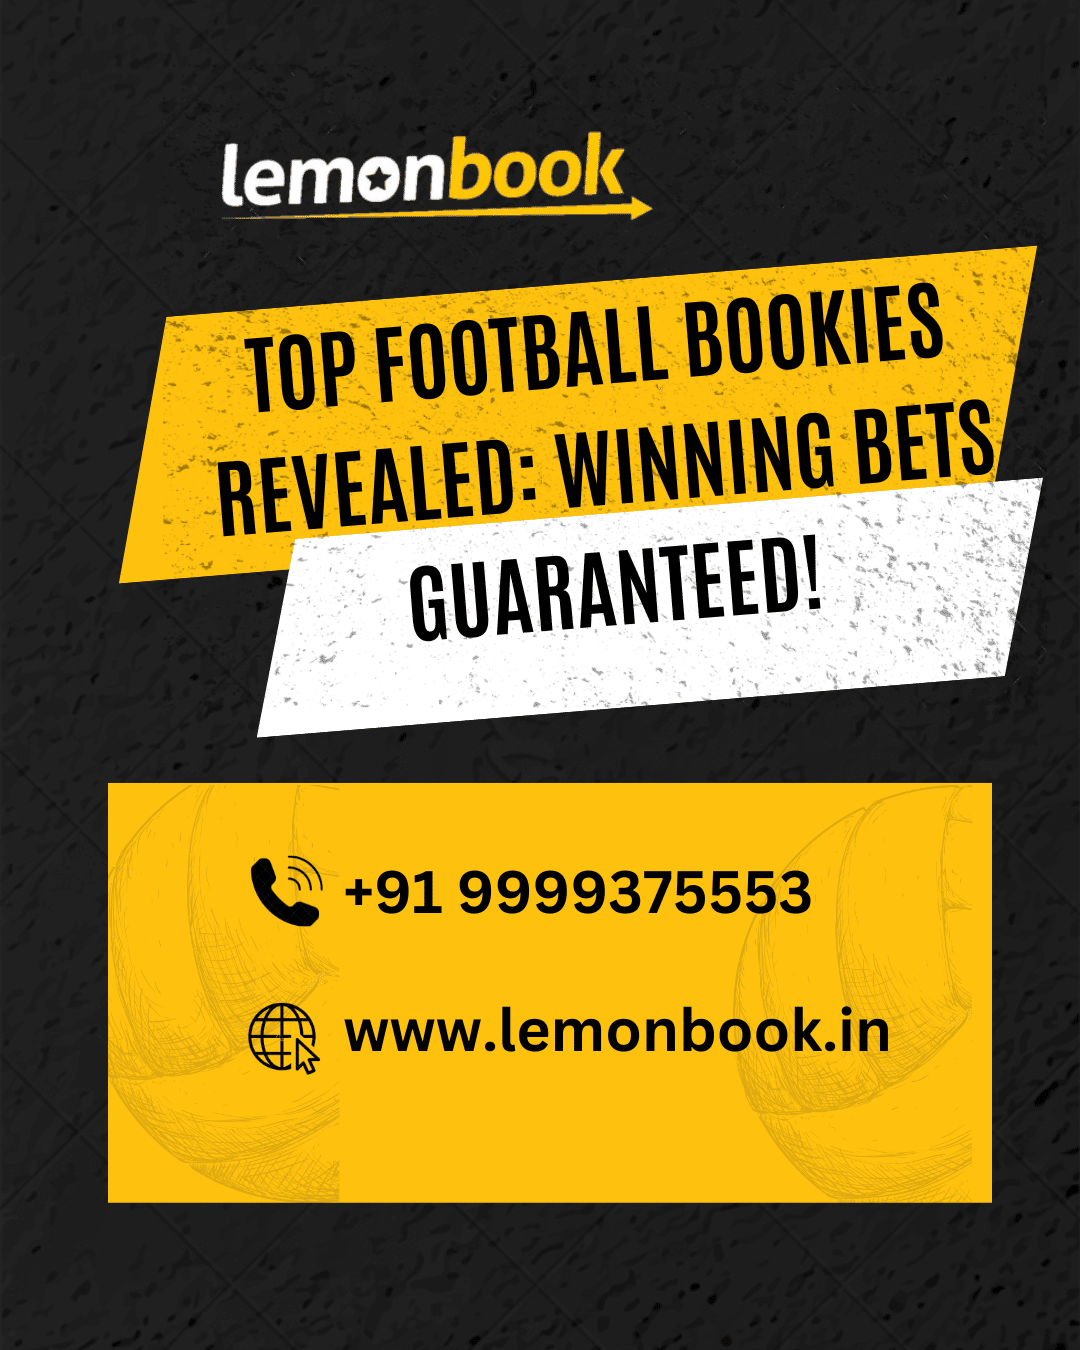 Top Football Bookies Revealed - Winning Bets Guaranteed!